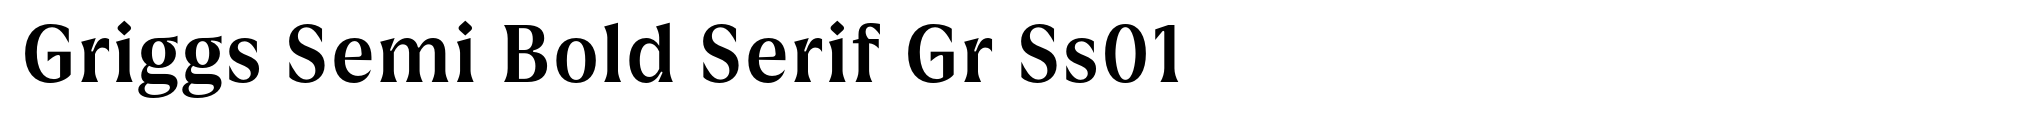 Griggs Semi Bold Serif Gr Ss01 image